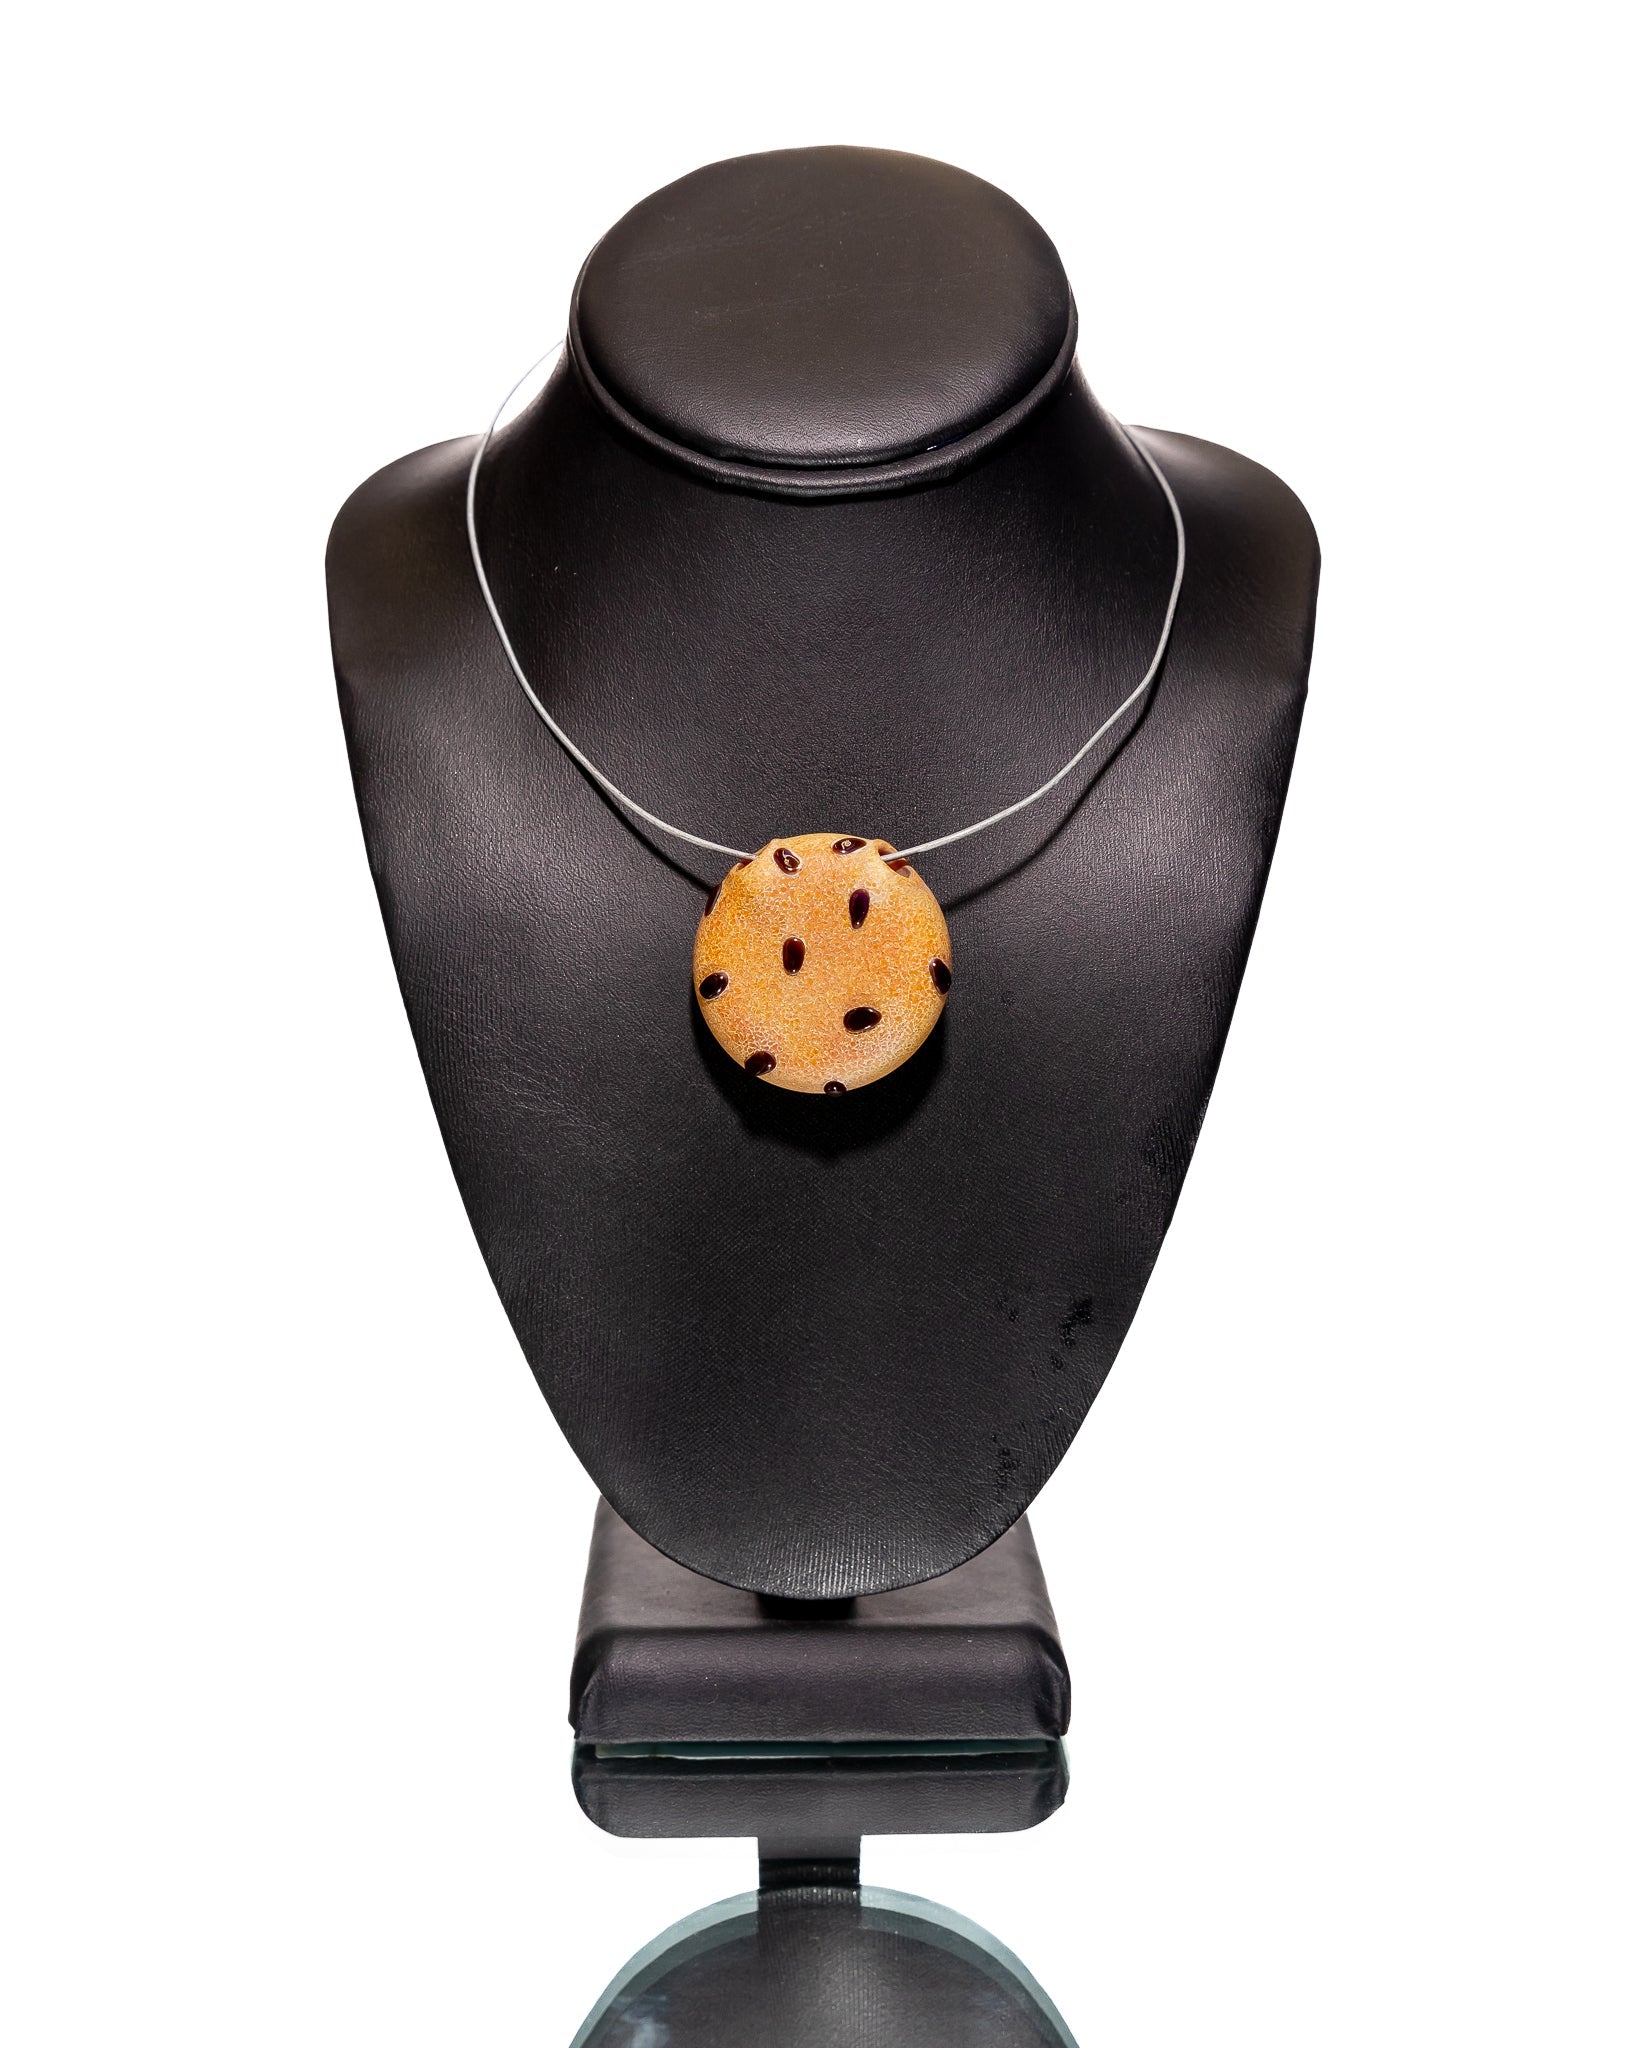 Rob Morrison Glass - Full Cookie Pendant